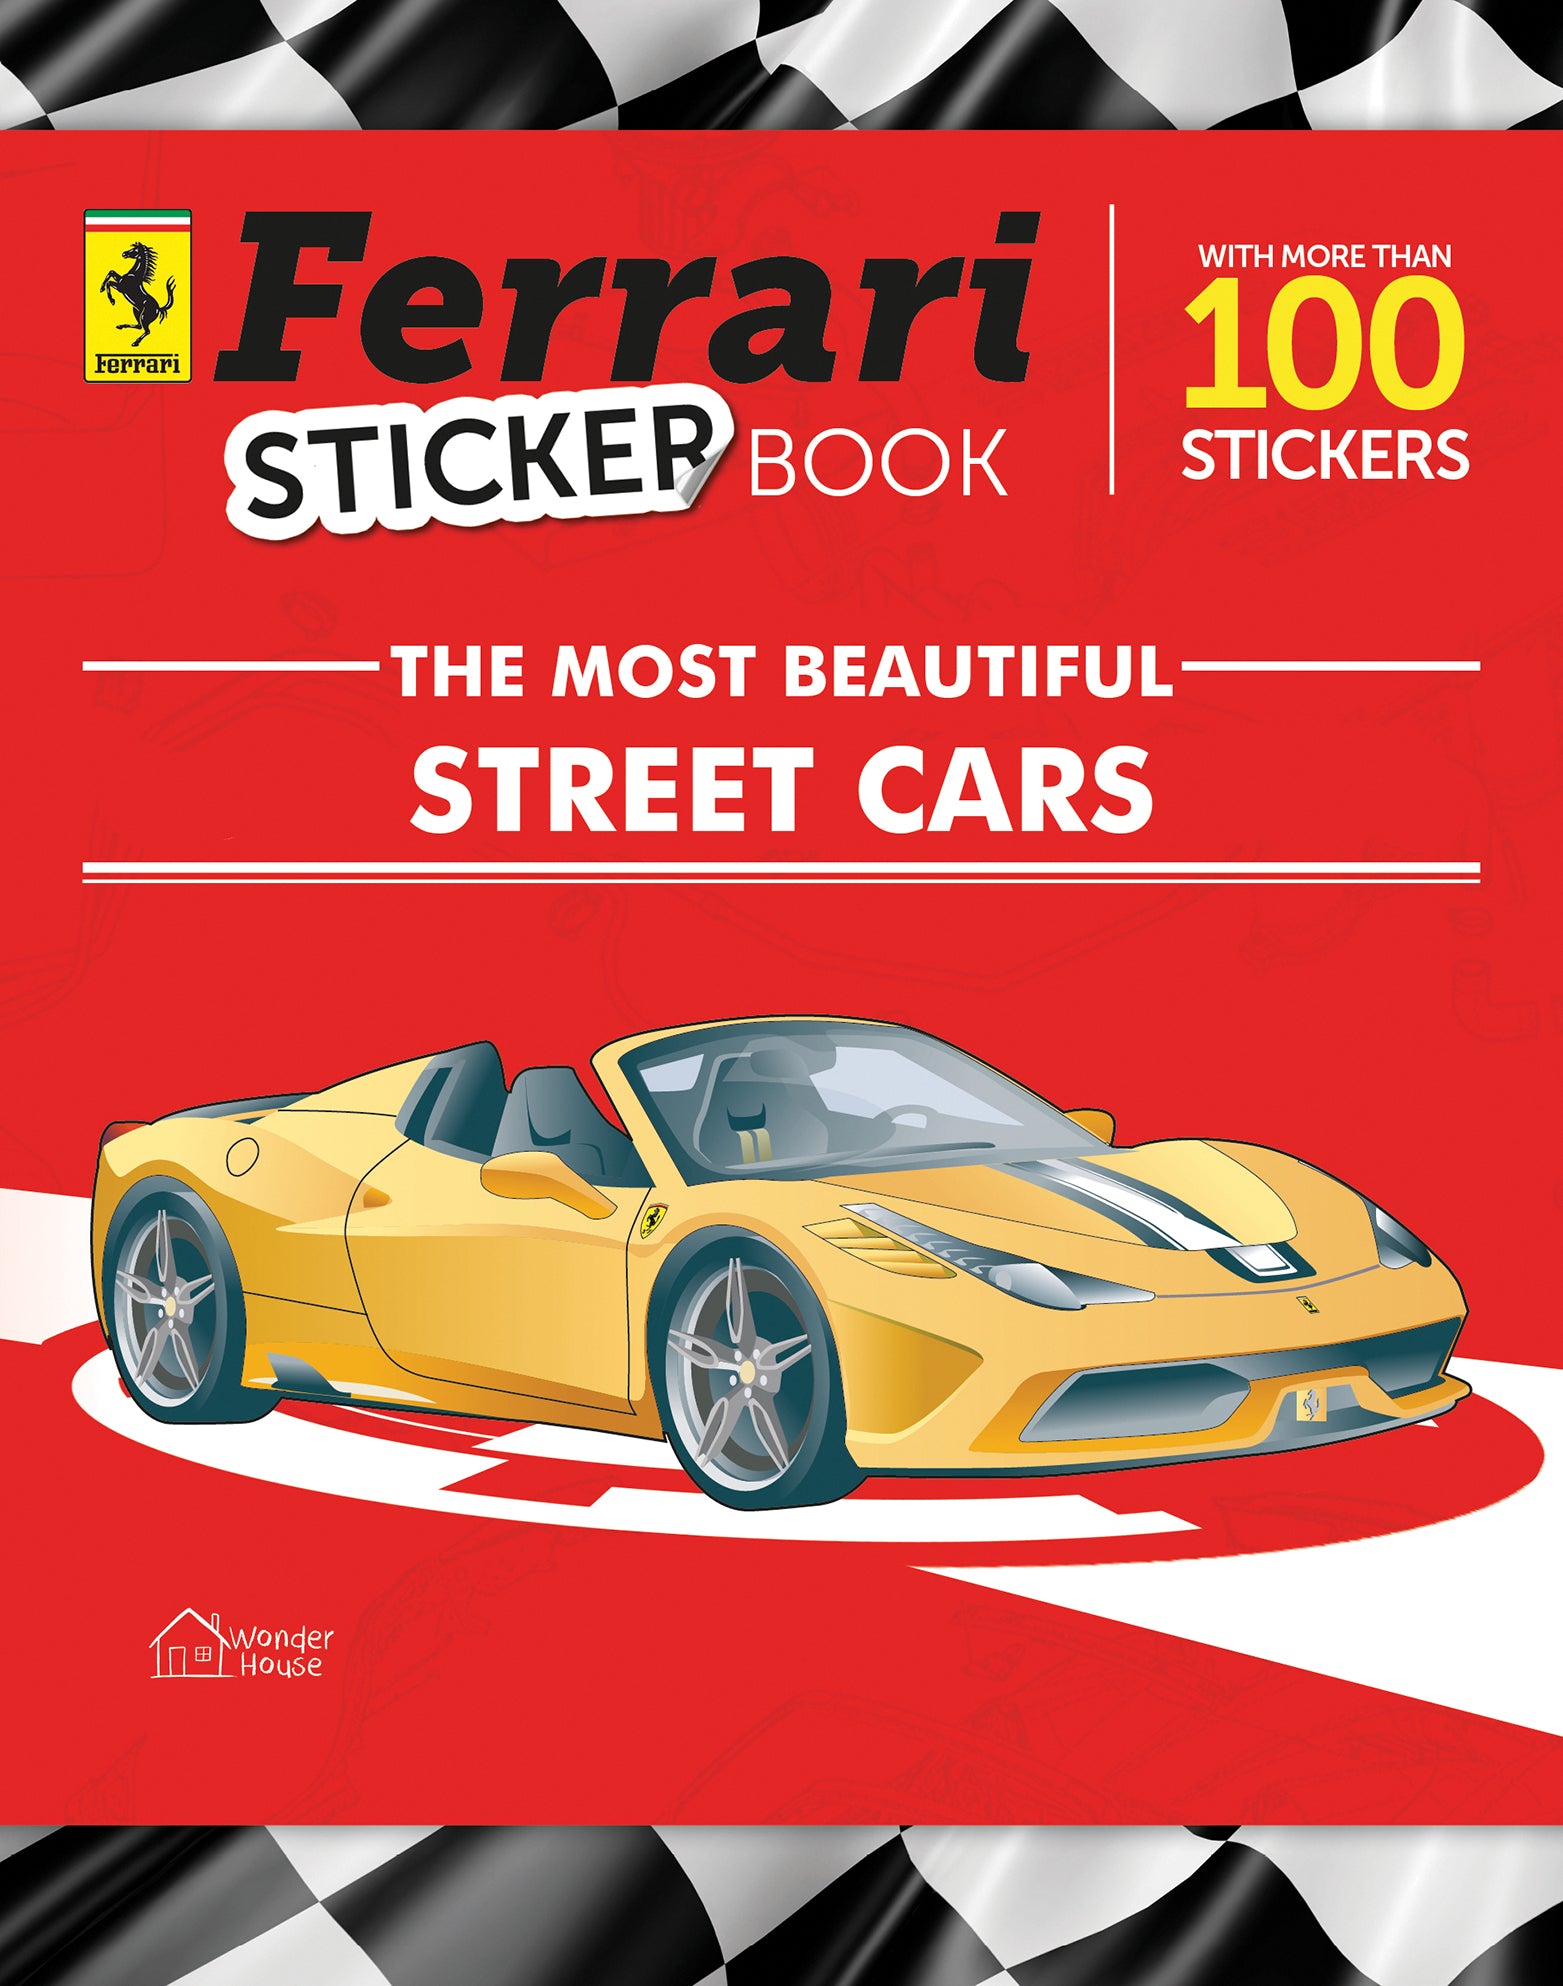 Ferrari Sticker Book For Kids: The Most Powerful Street Cars